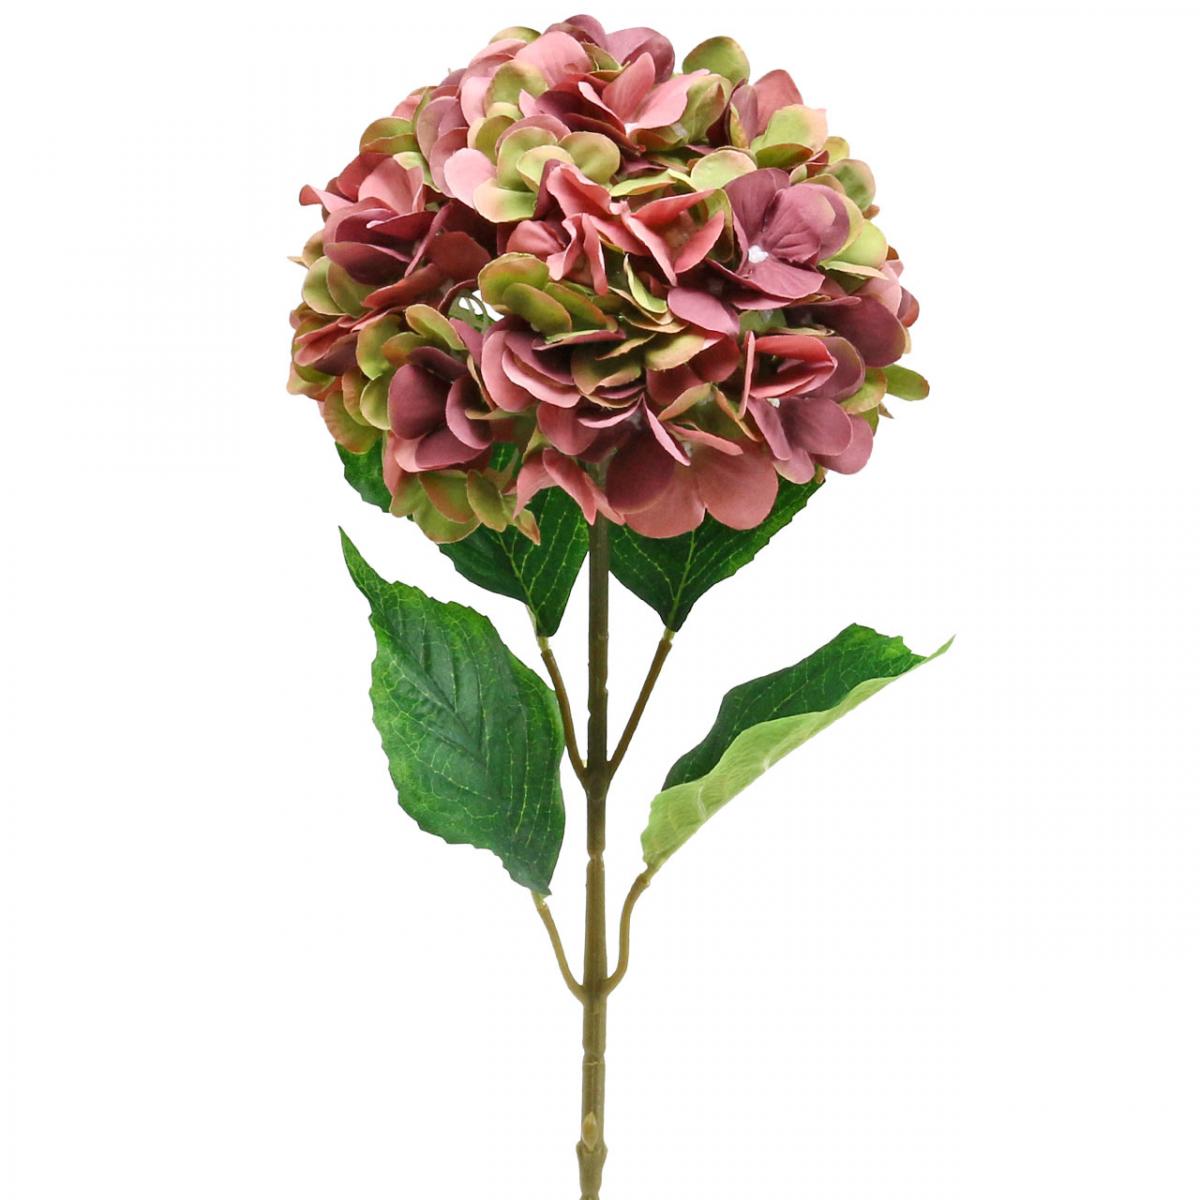 Rosa, künstlich 80cm-69802 Floristik21.de Kunstblume groß Bordeaux Hortensie